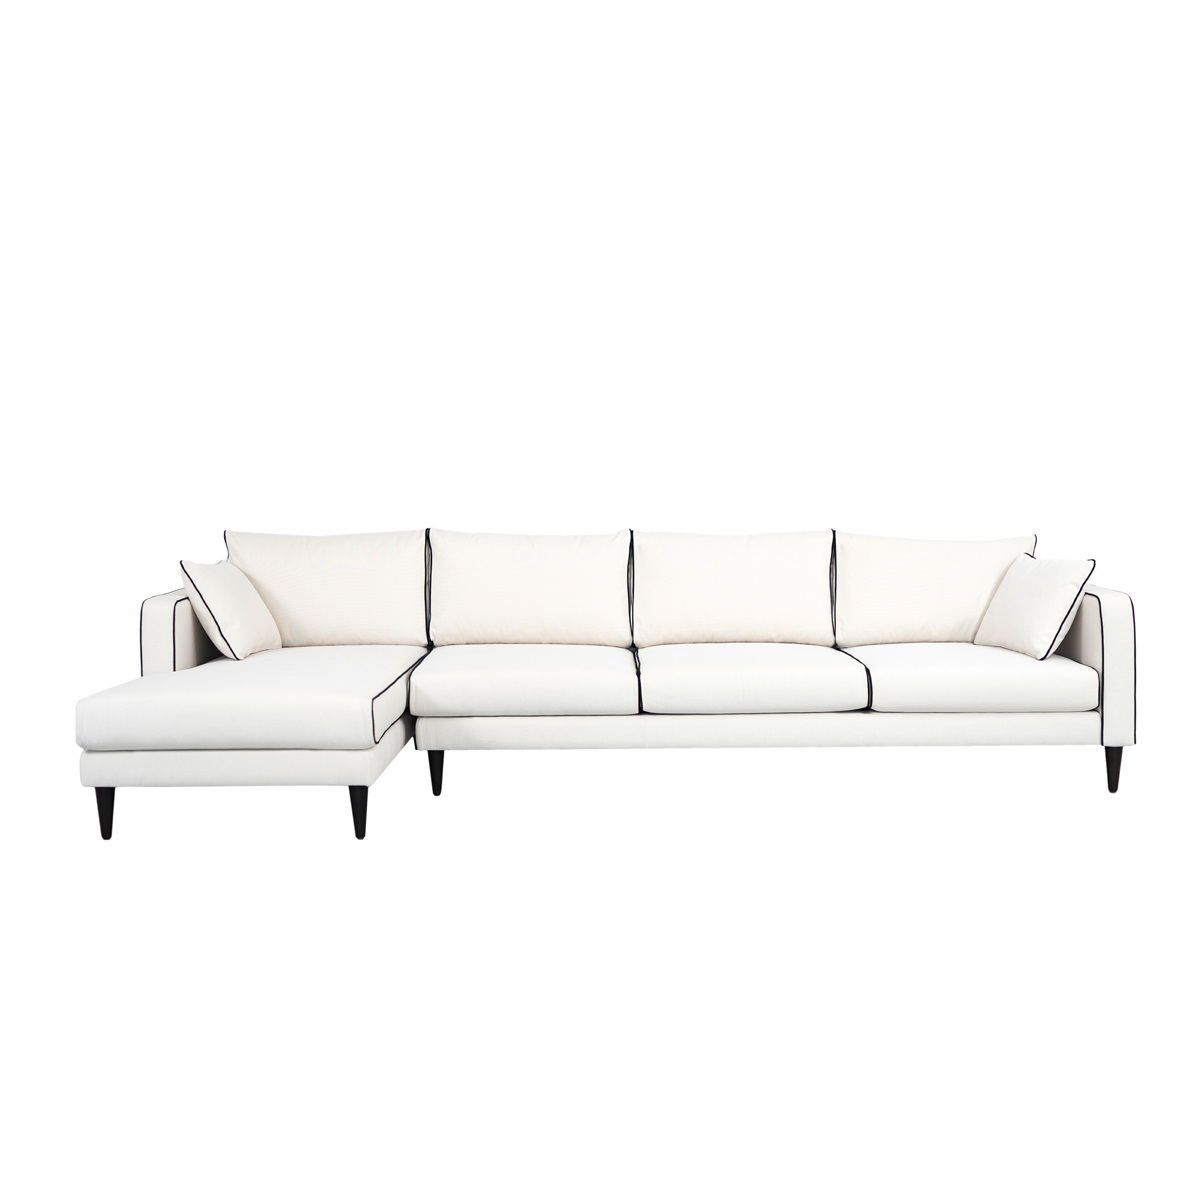 Noa corner sofa - Left angle, L230 x P150 x H75 cm - Cotton - image 1